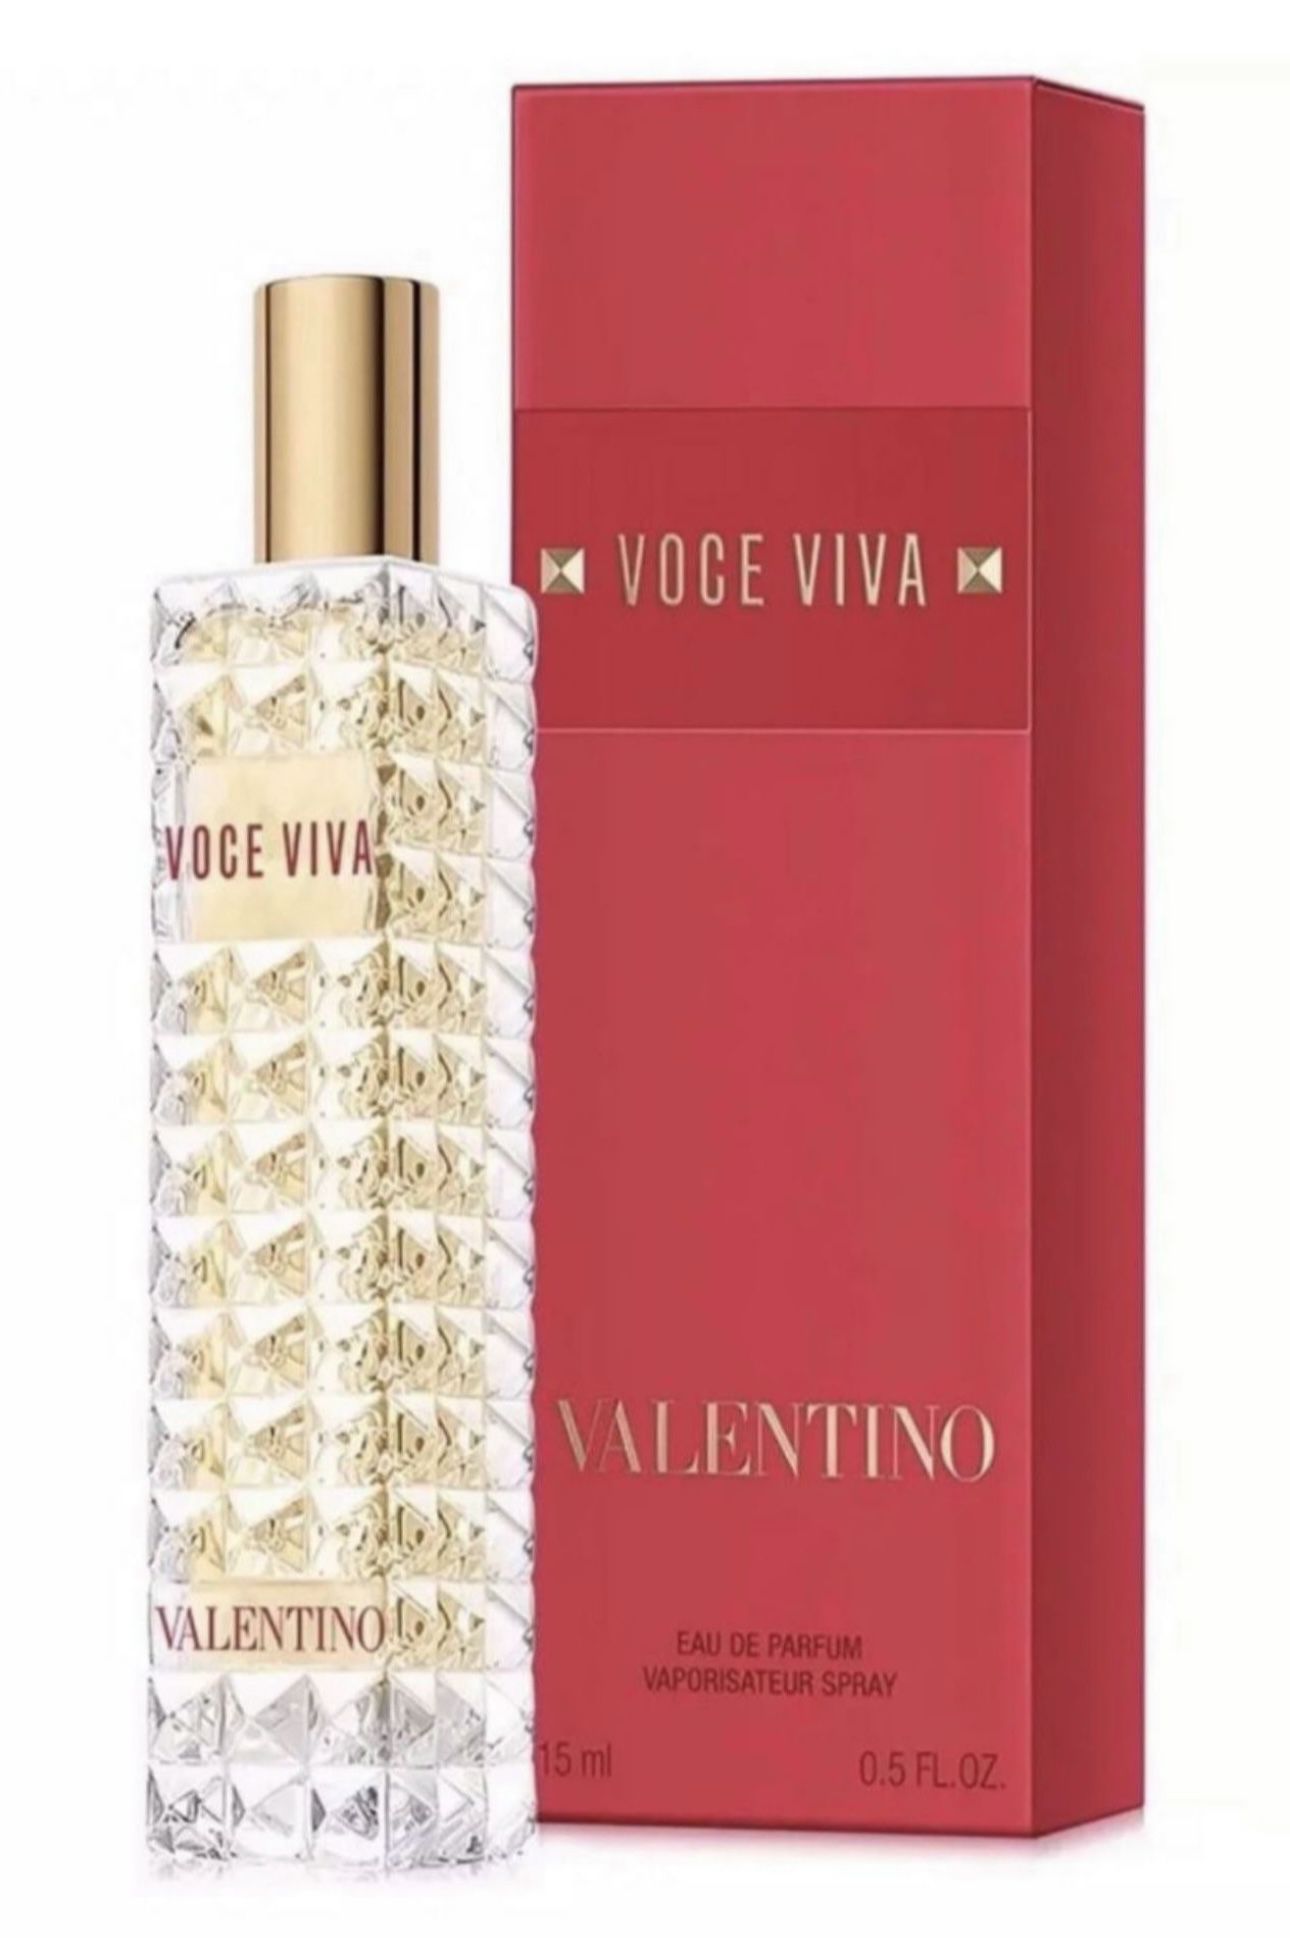 New New Valentino Voce Vita Women's fragrance 15ml Travel Size LAST ONE